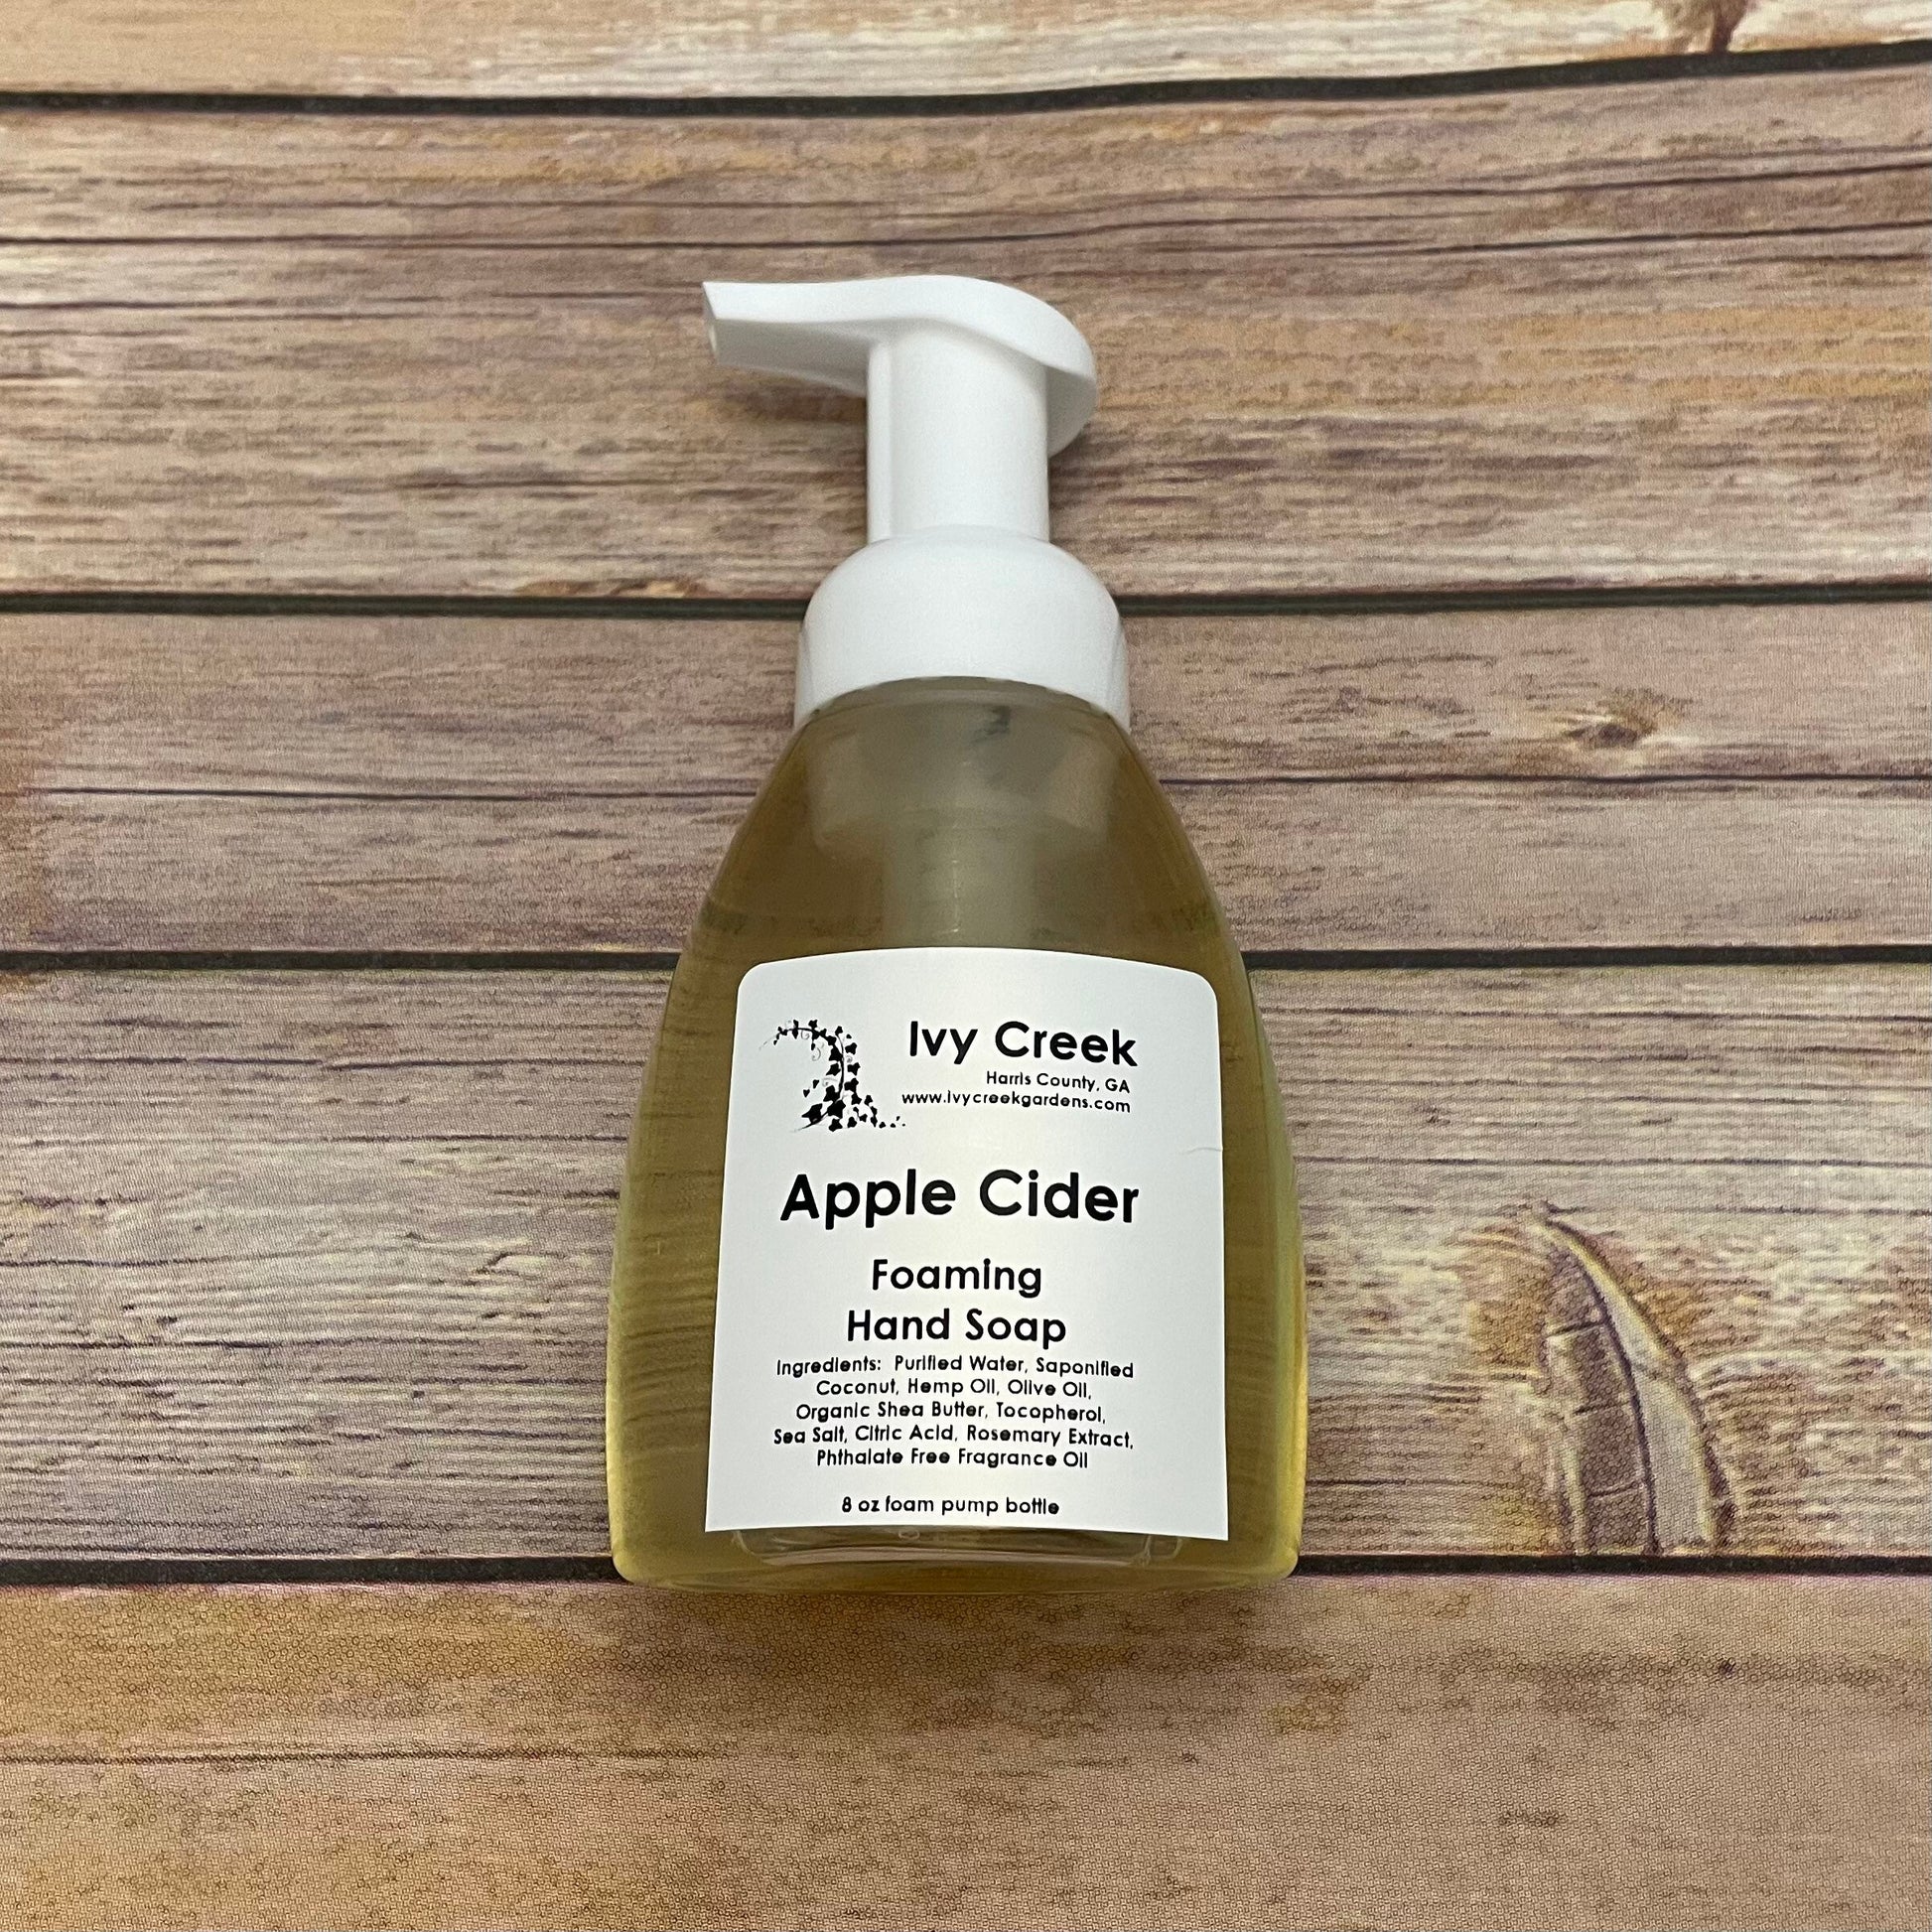 Ivy Creek Apple Cider Foaming Hand Soap - Natural Hand Soap - 8 oz